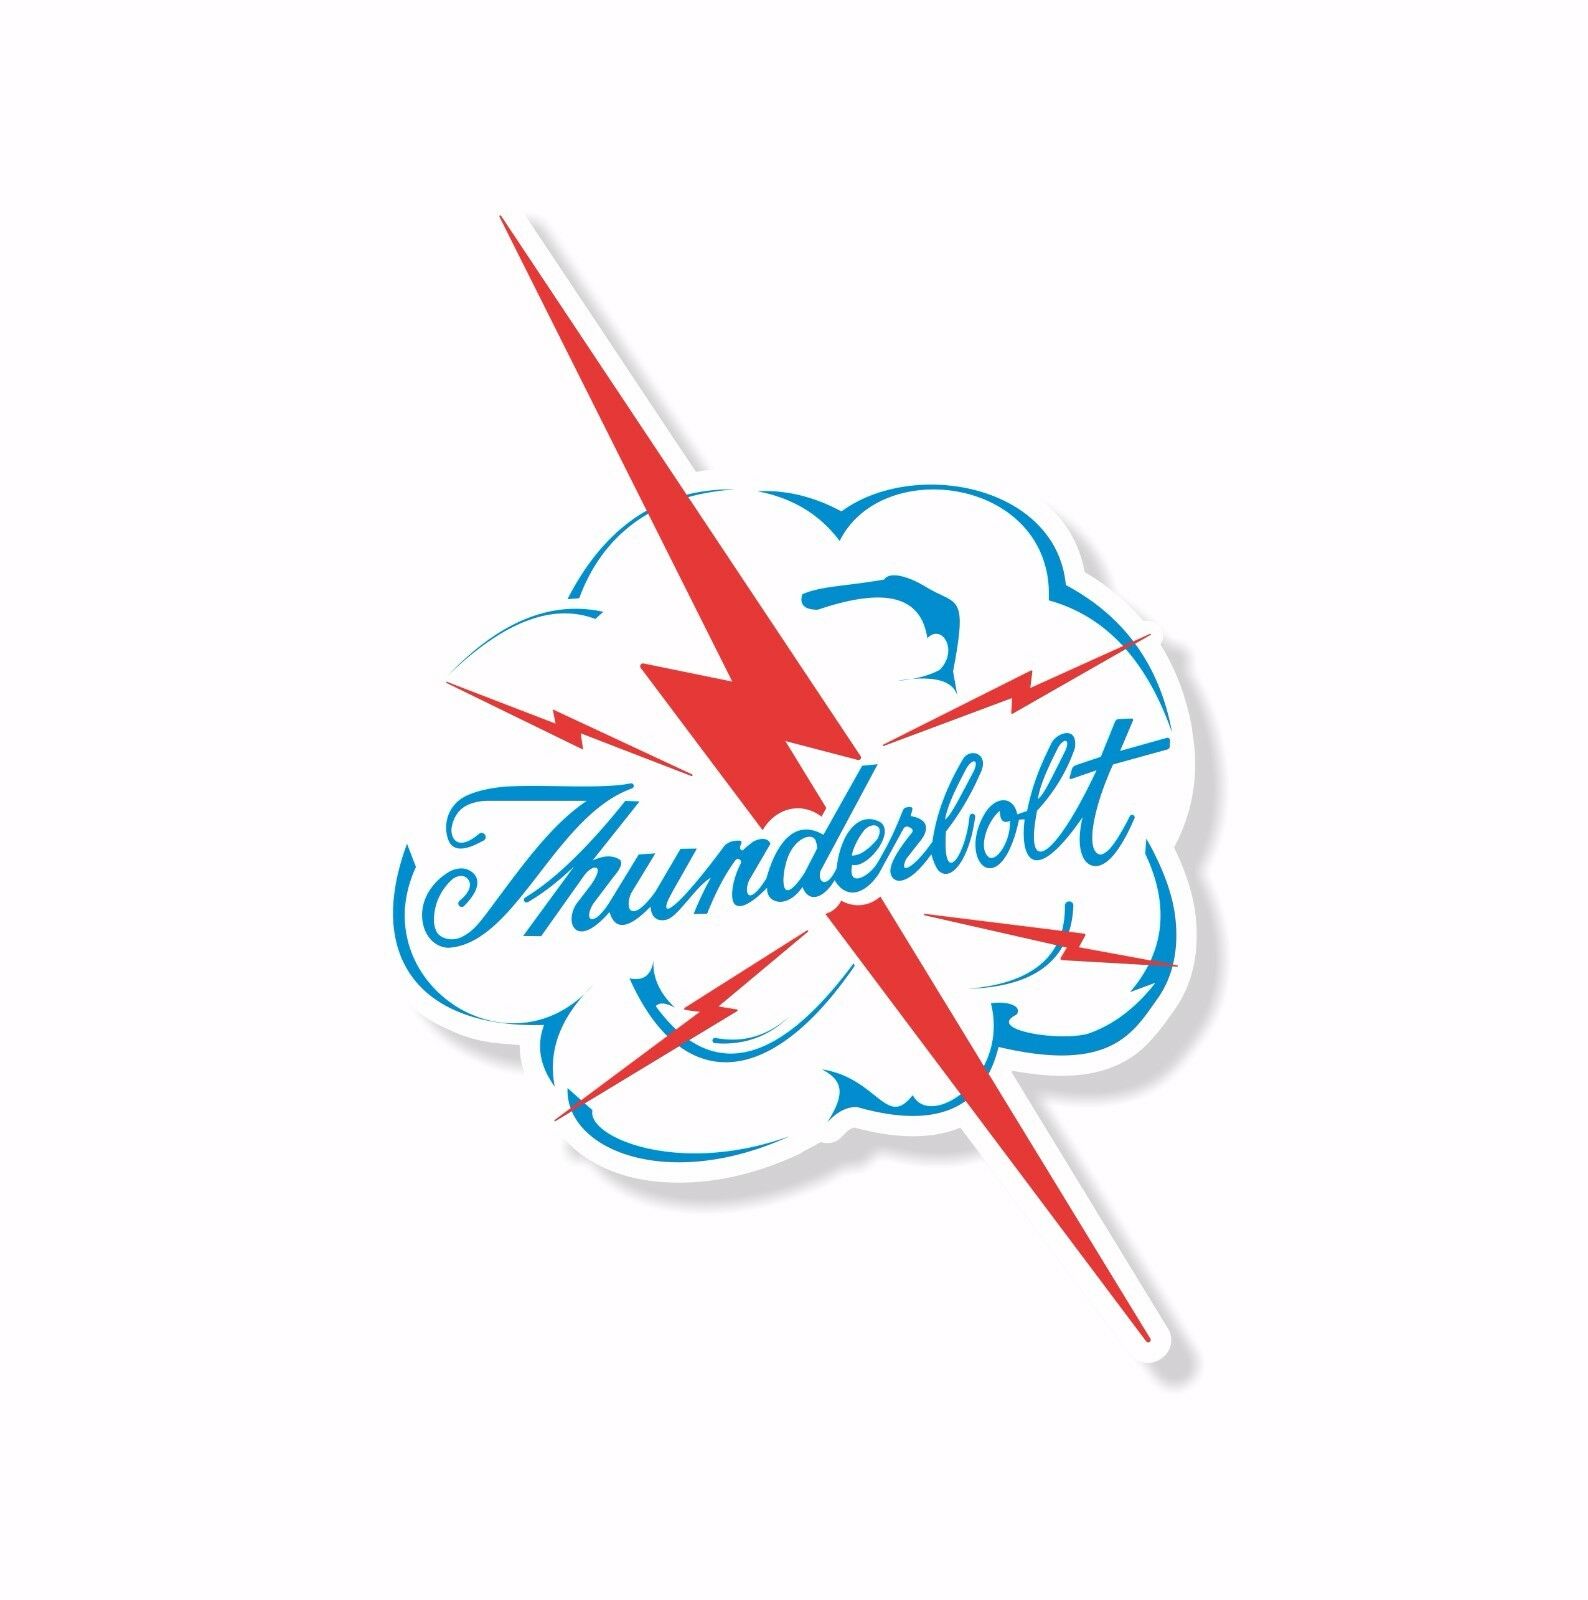 Bsa Thunderbolt Cloud Motorcycle Motorbike Decal Sticker